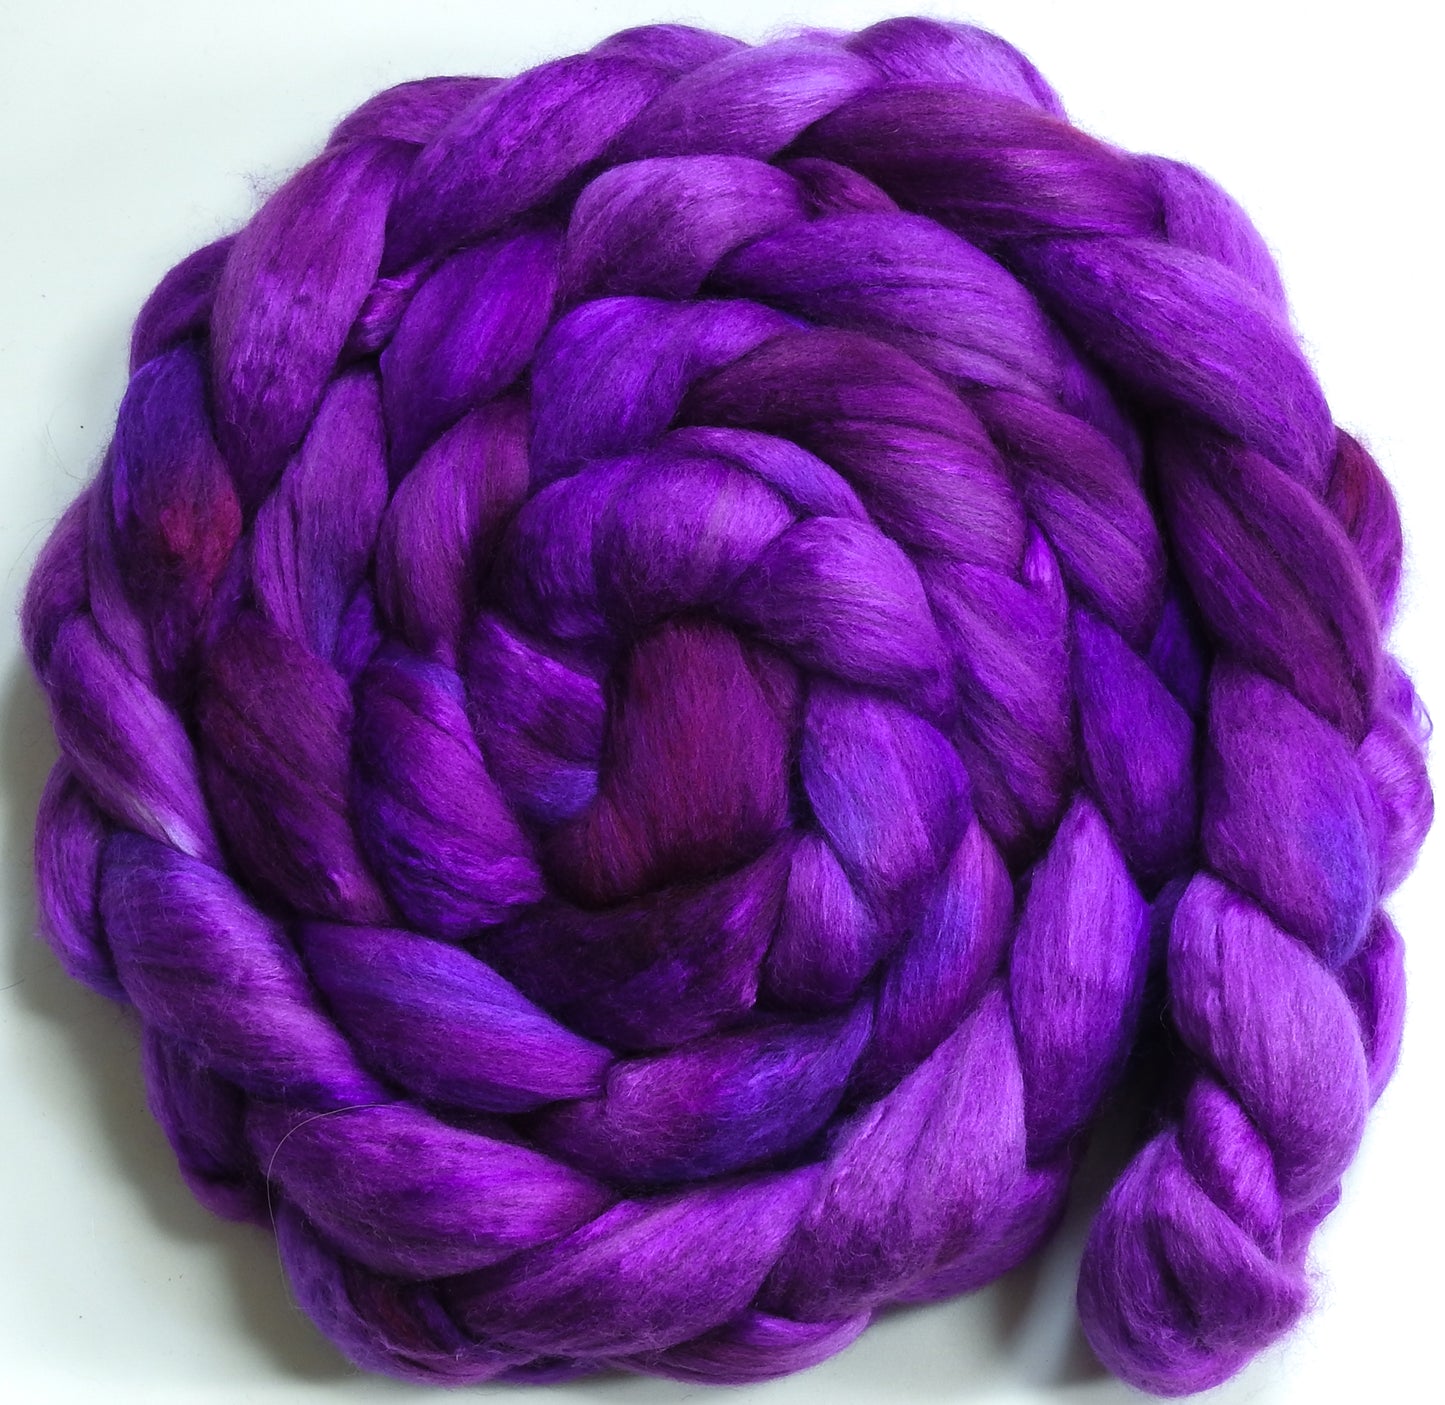 Joyeaux (5.4 oz) - Merino/ Mulberry Silk (60/40)